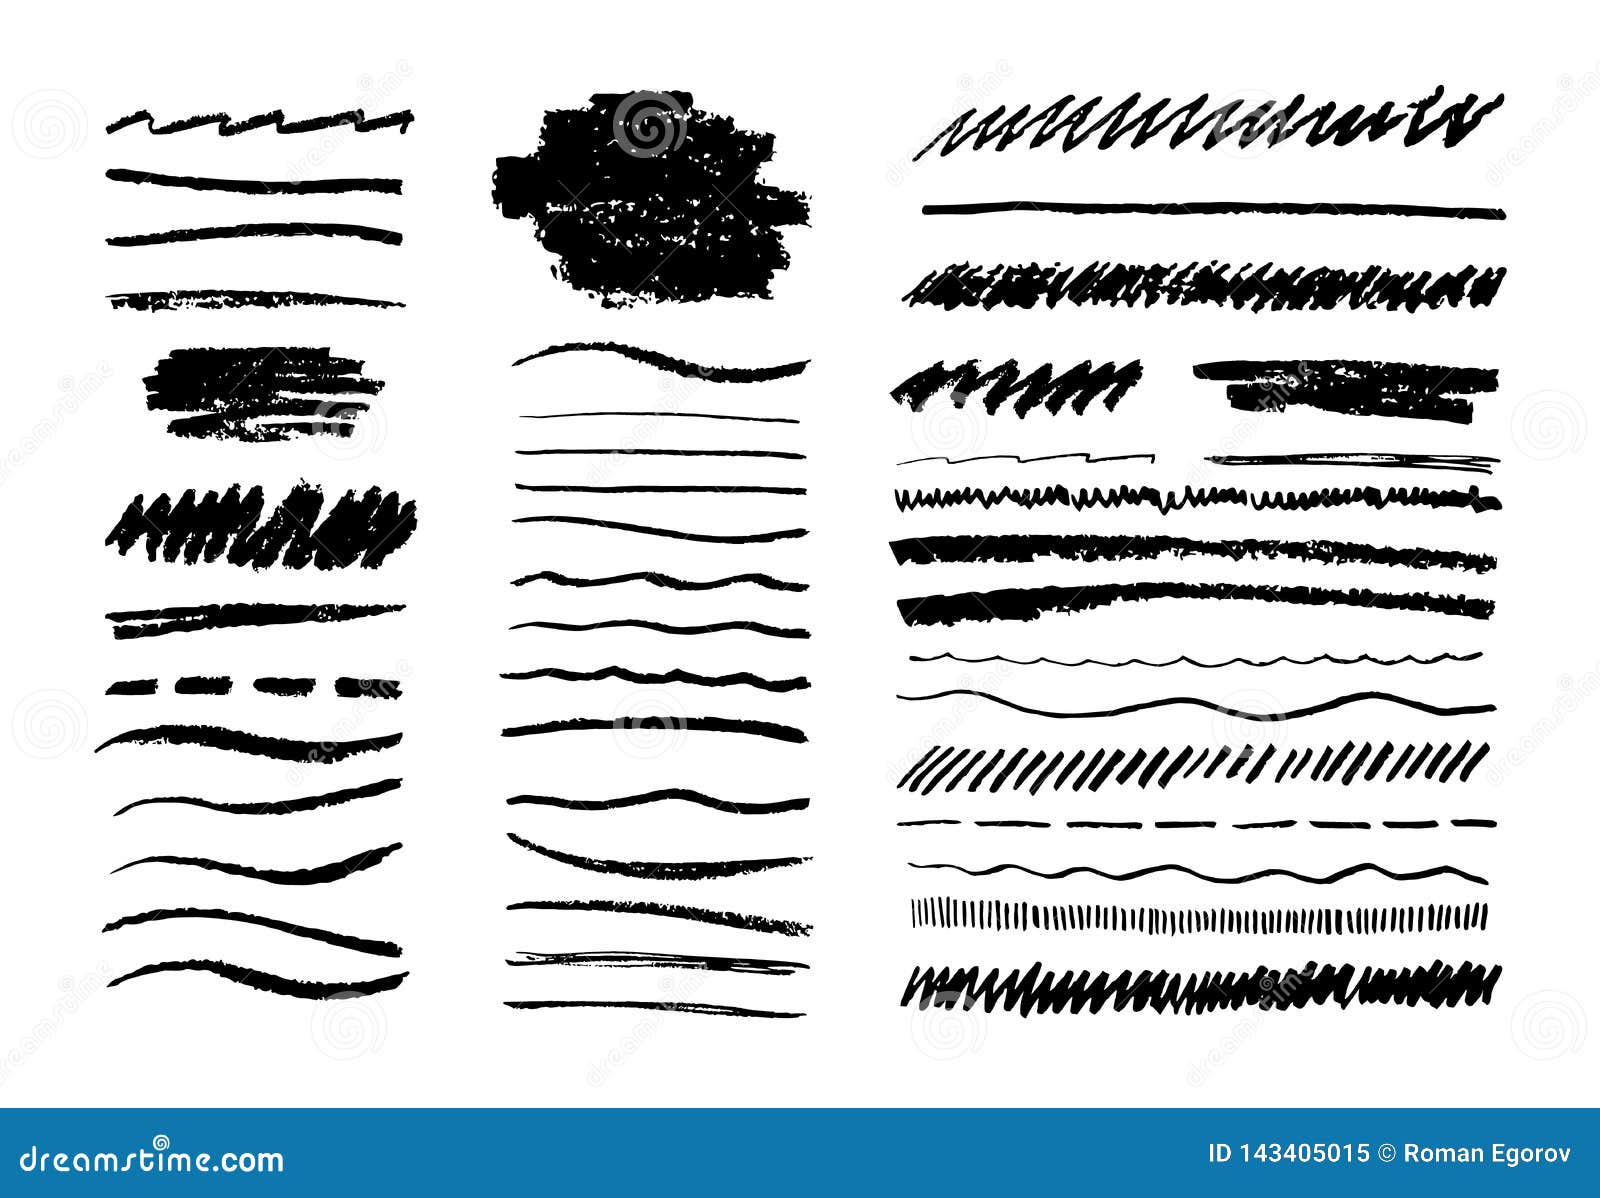 grunge pencil line. scribble chalk brush, black doodle graphite art texture, hand drawn sketch s.  grungy